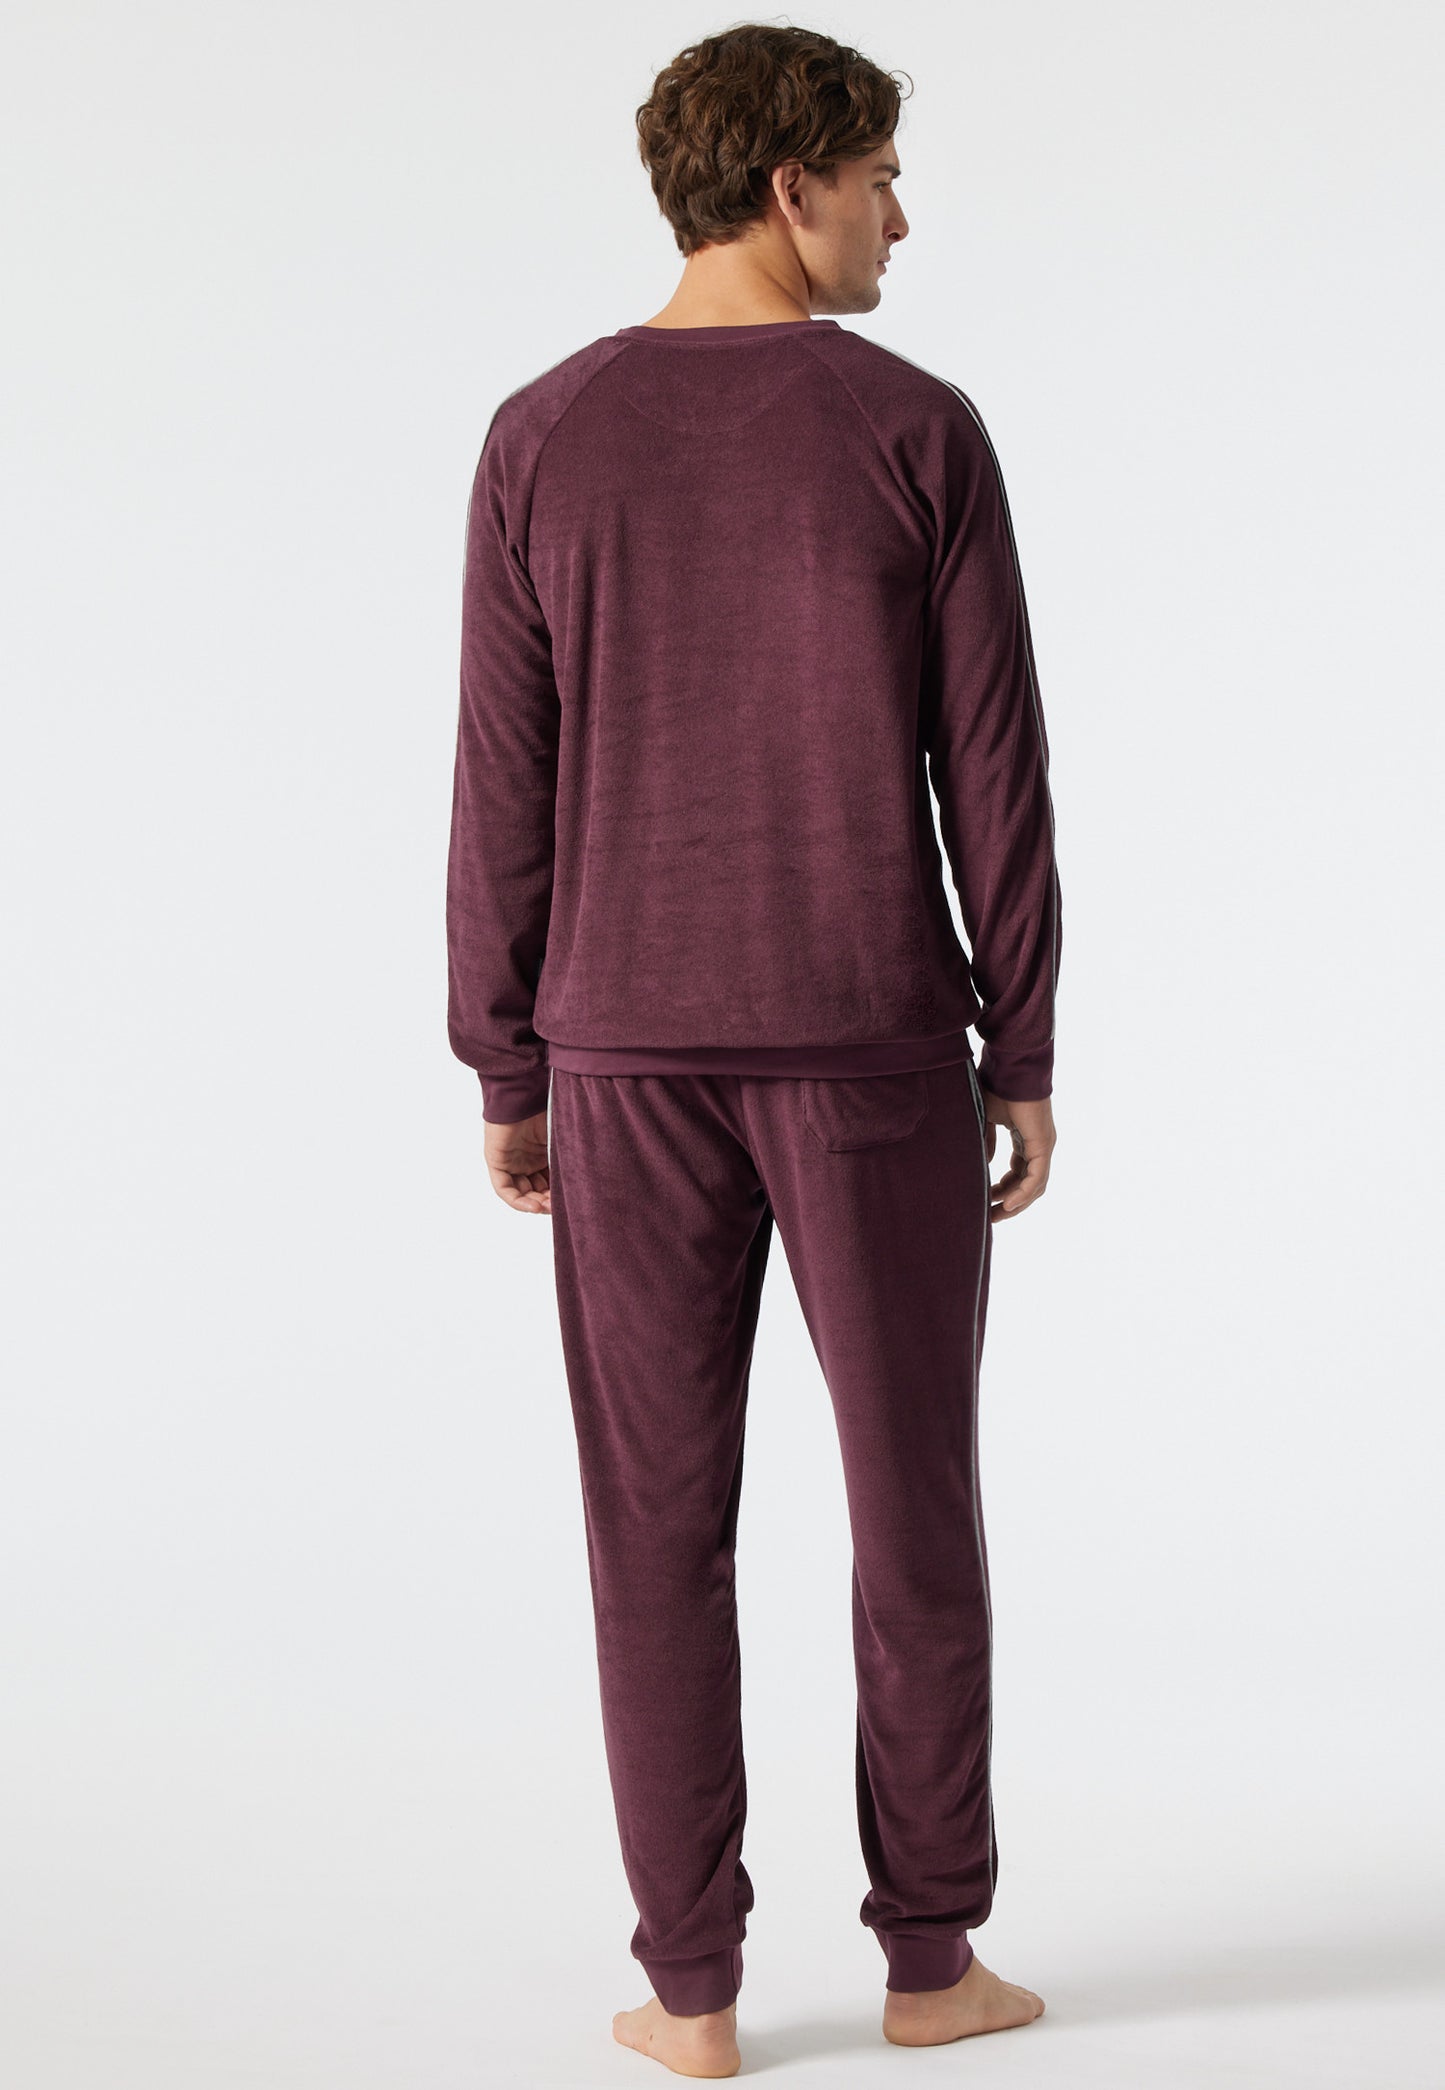 Pajamas long terry modal cuffs burgundy - Warming Nightwear